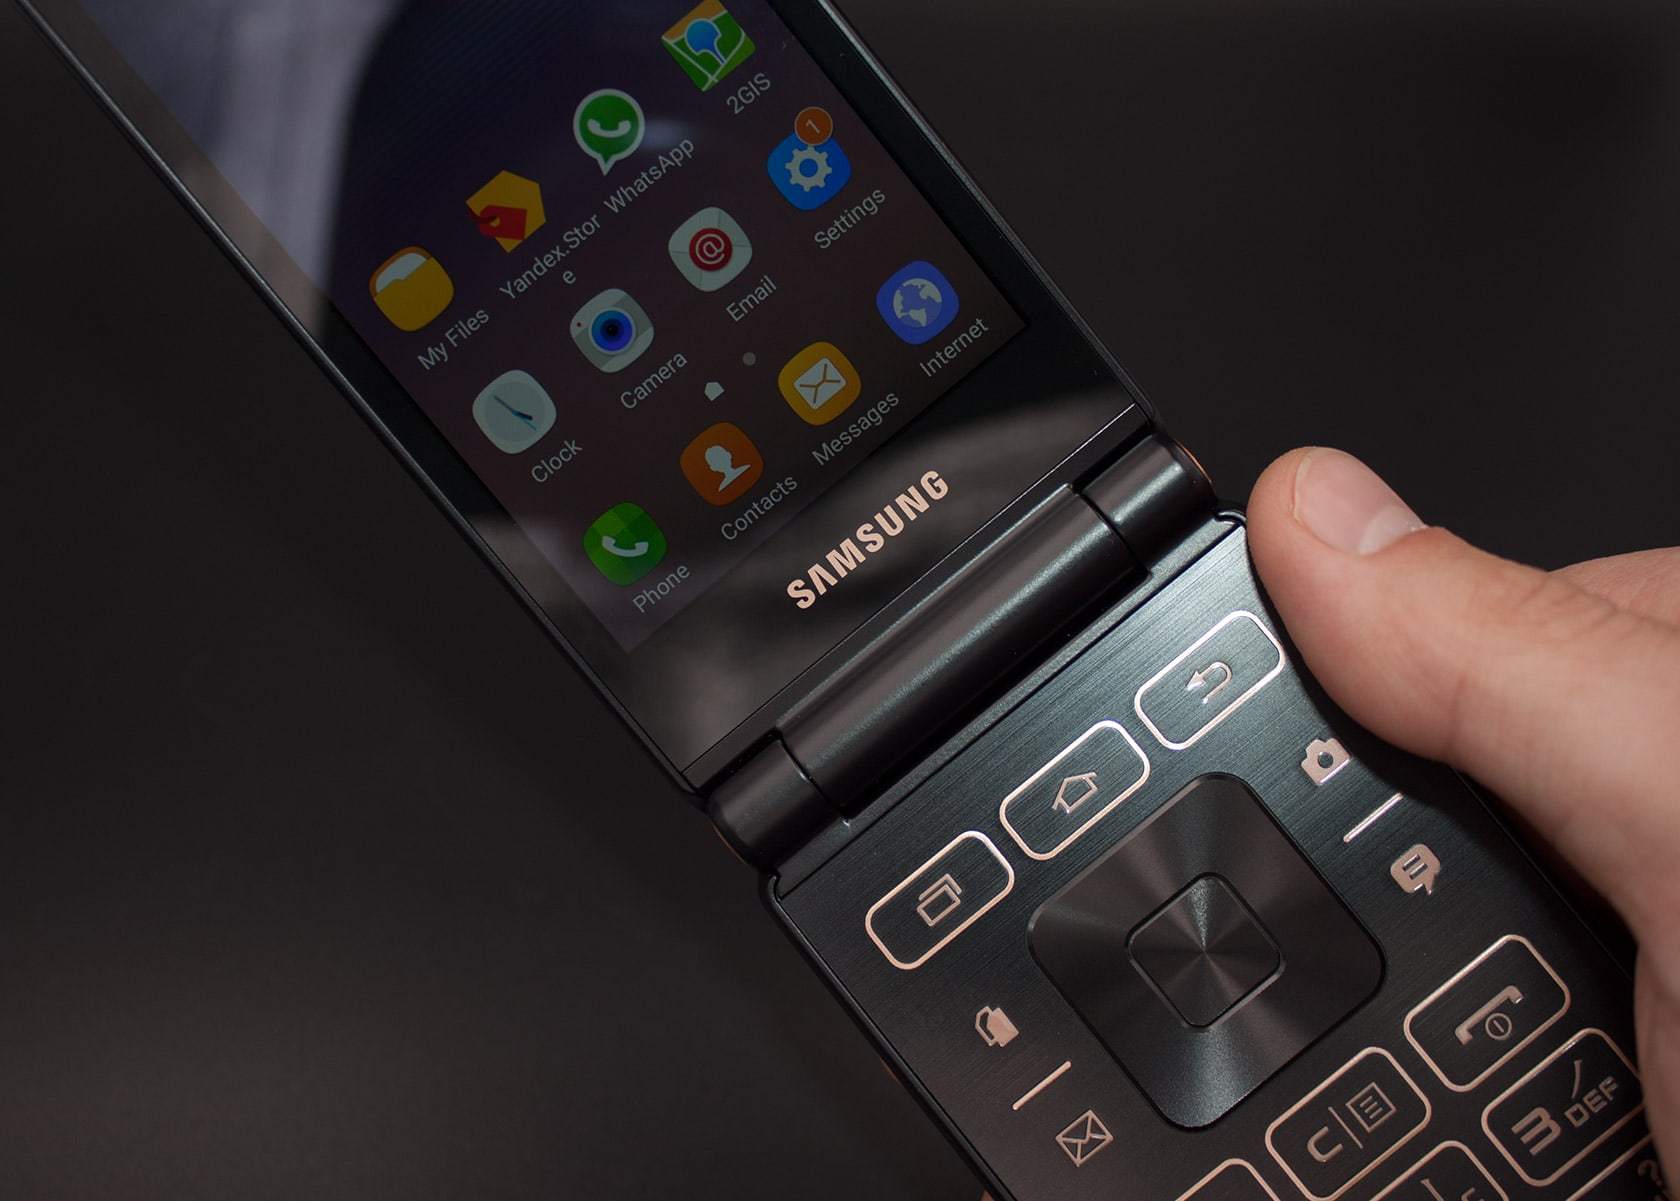 Samsung Galaxy Folder 2 Sm G1650 Купить